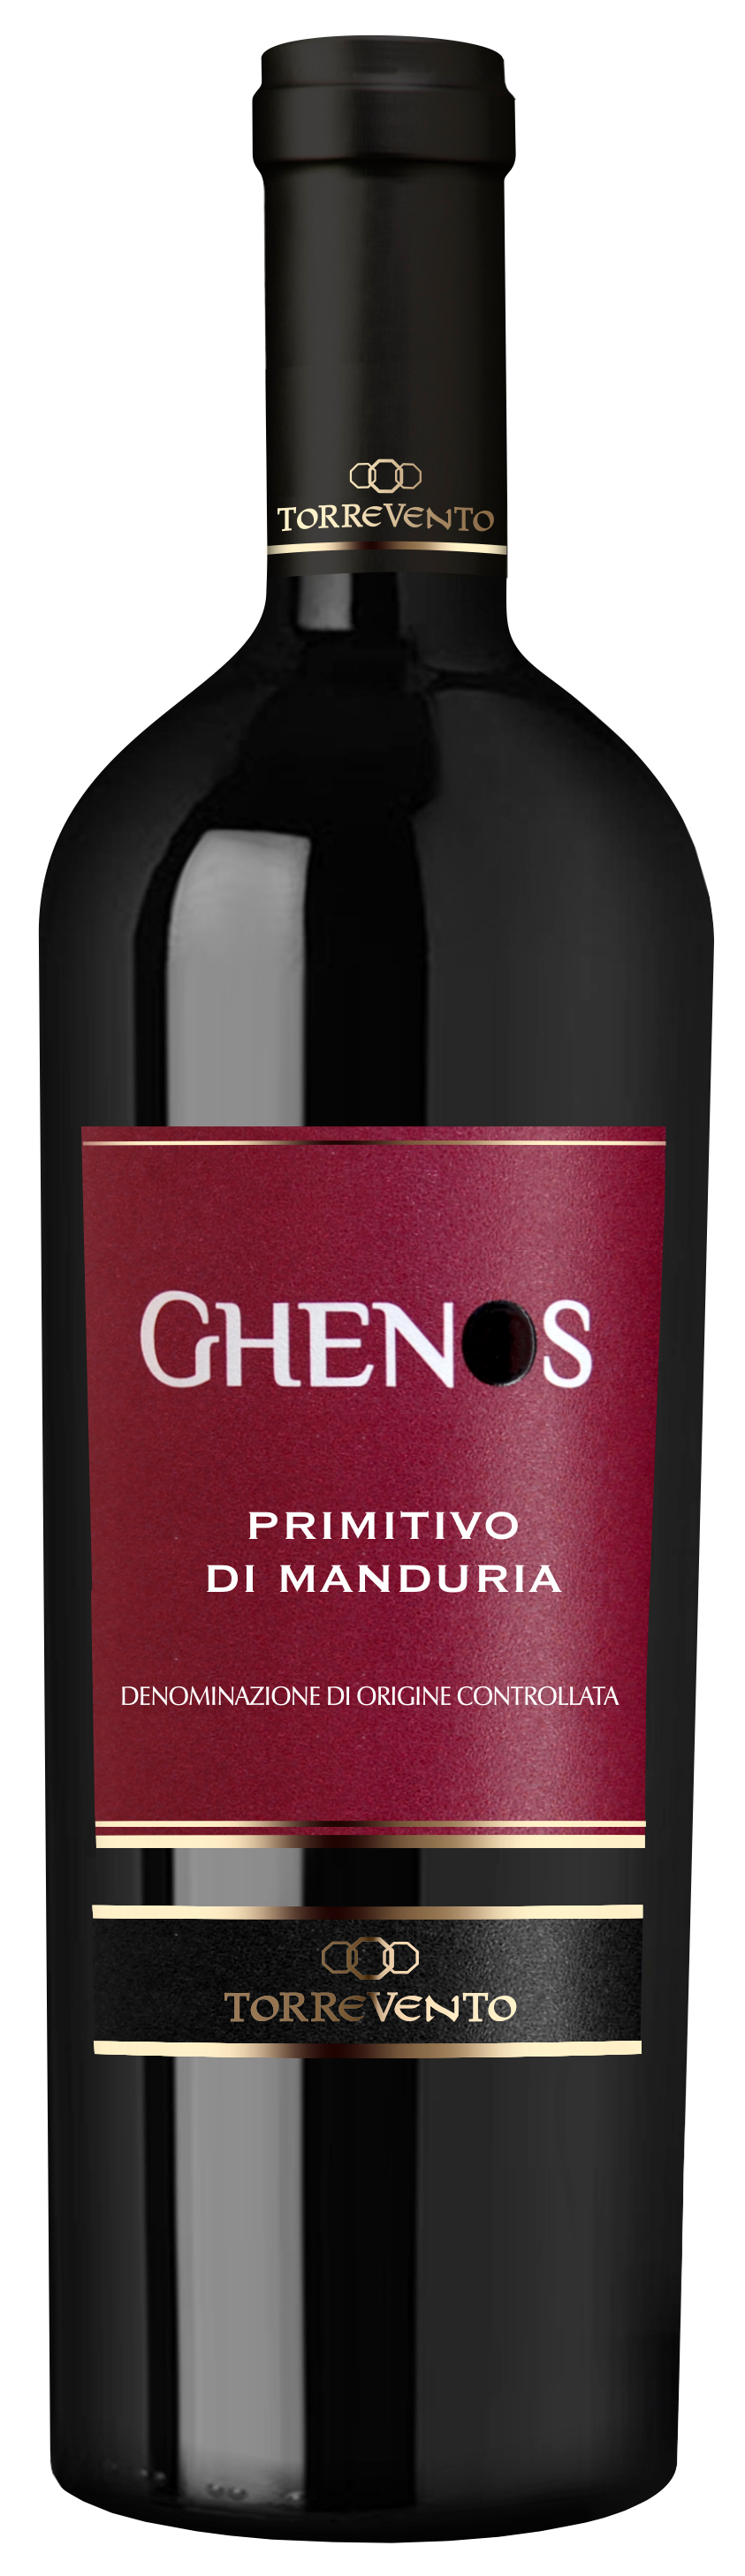 Ghenos-Primitivo-di-Manduria